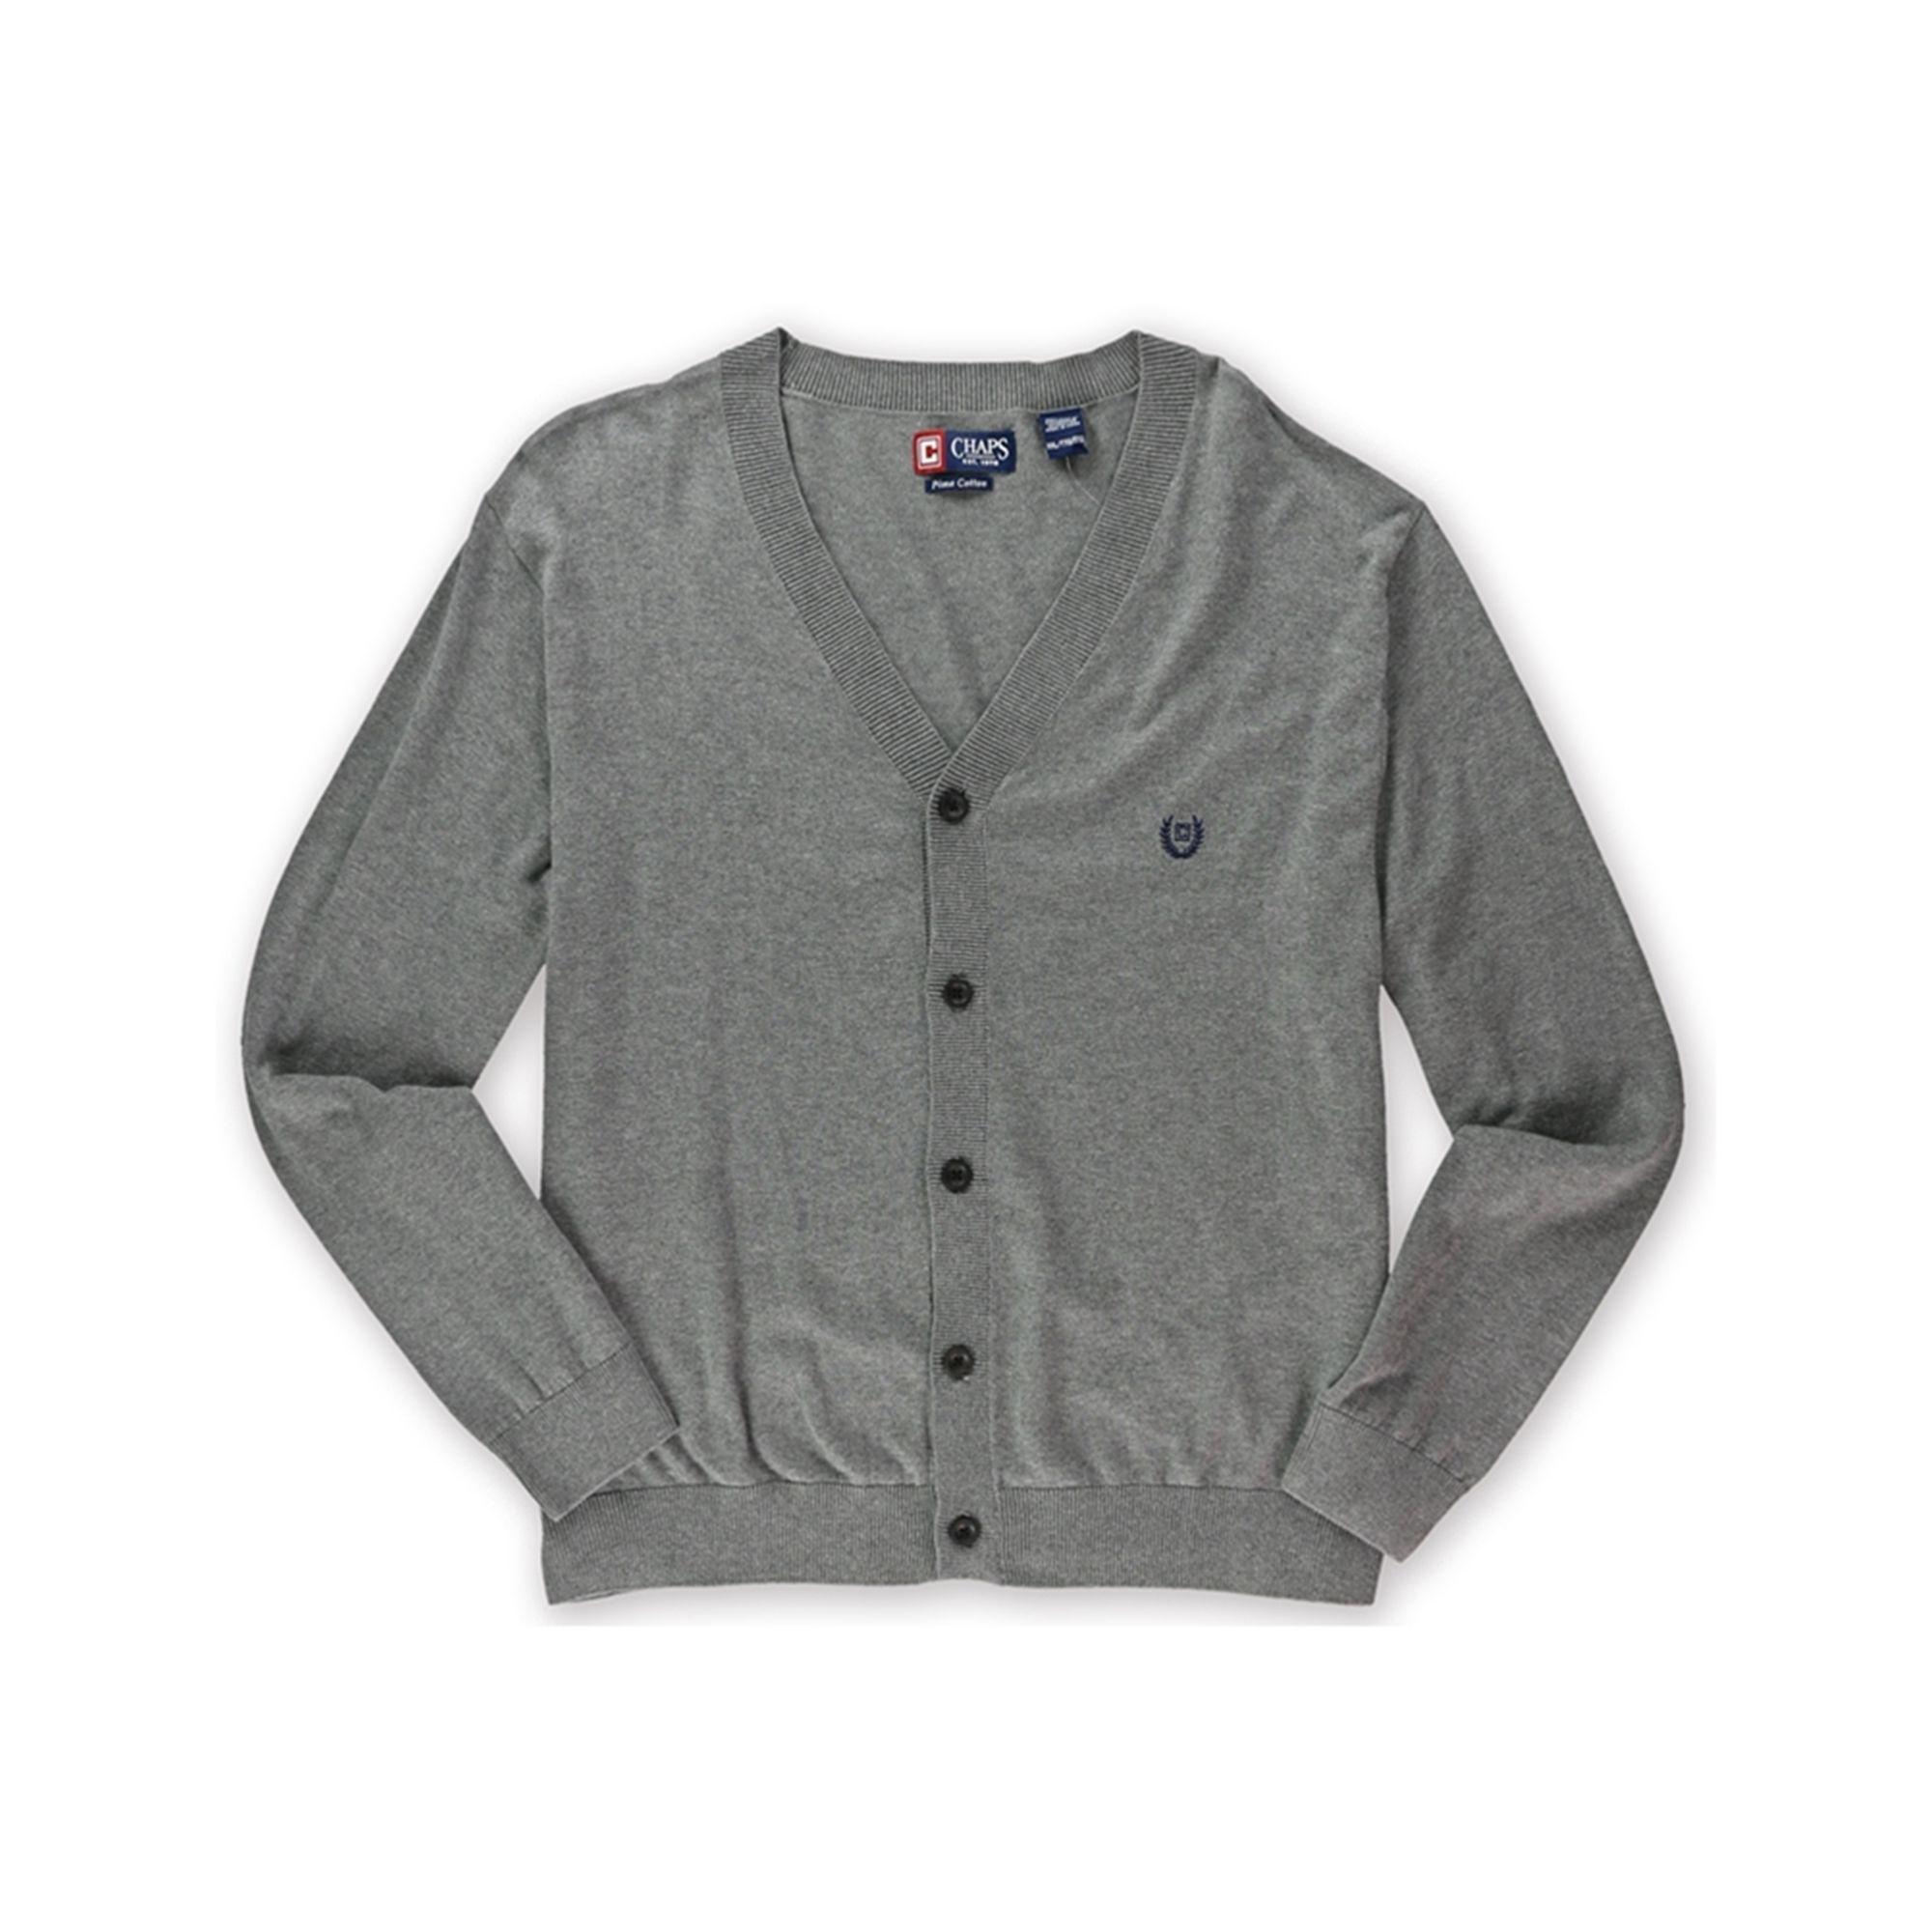 Chaps Clothing Logo - Chaps Mens Pima Cotton Logo Cardigan Sweater